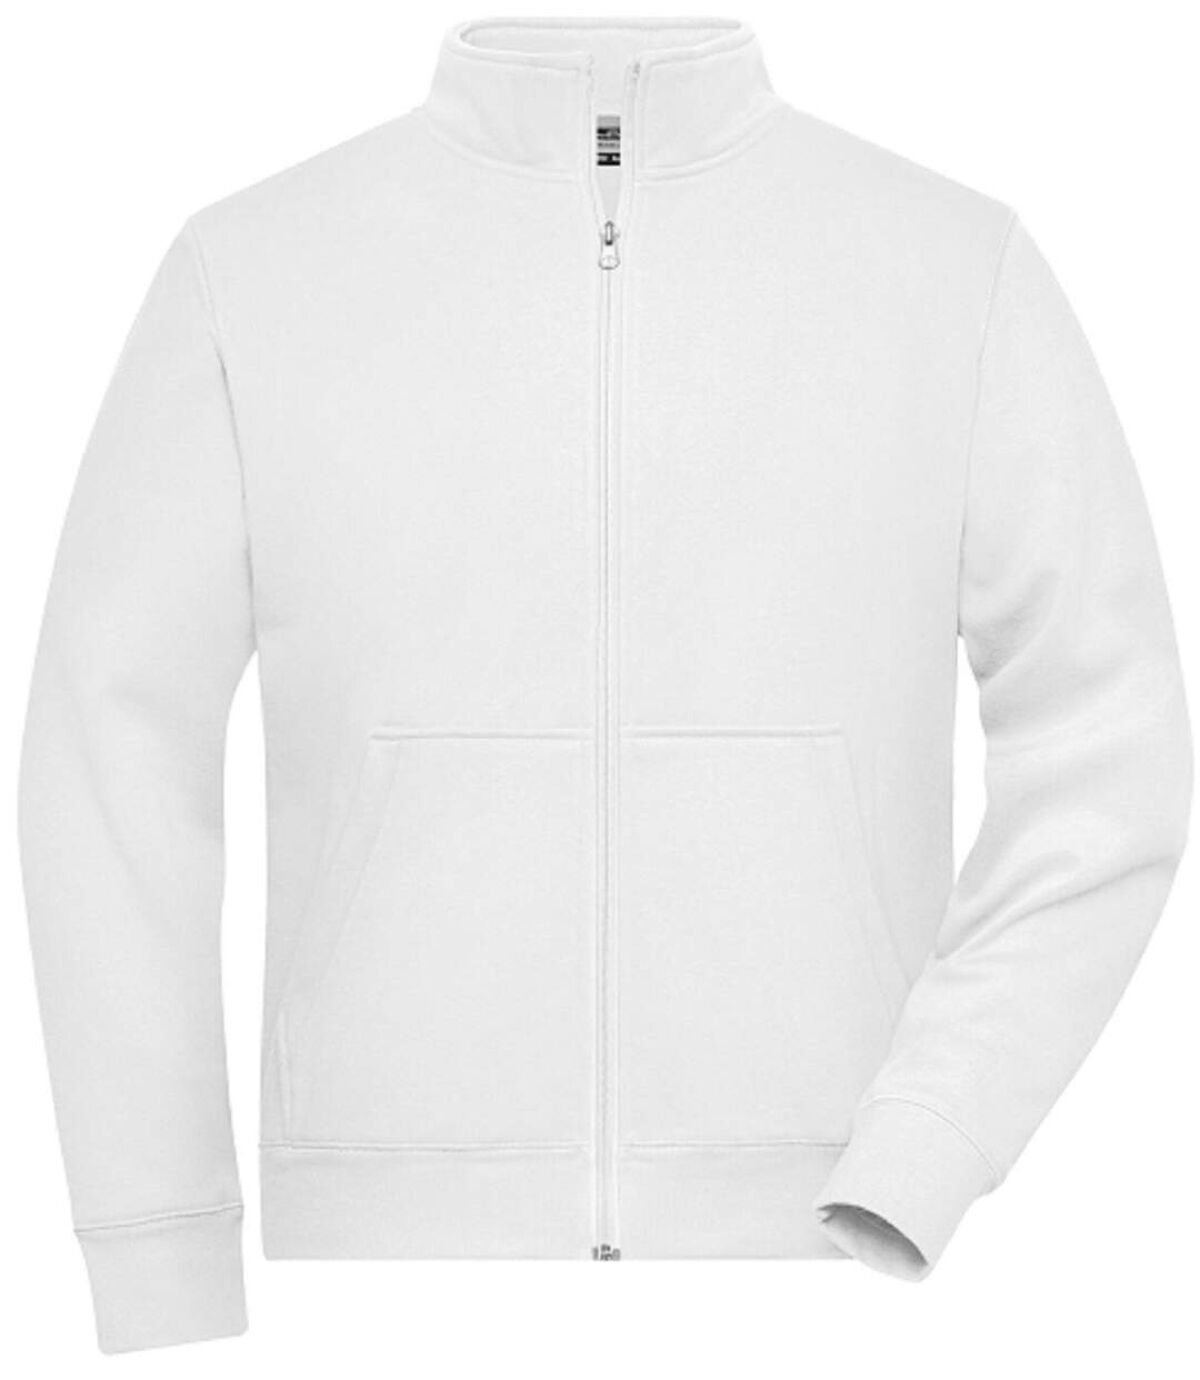 Veste sweat zippée workwear - Homme - JN1810 - blanc